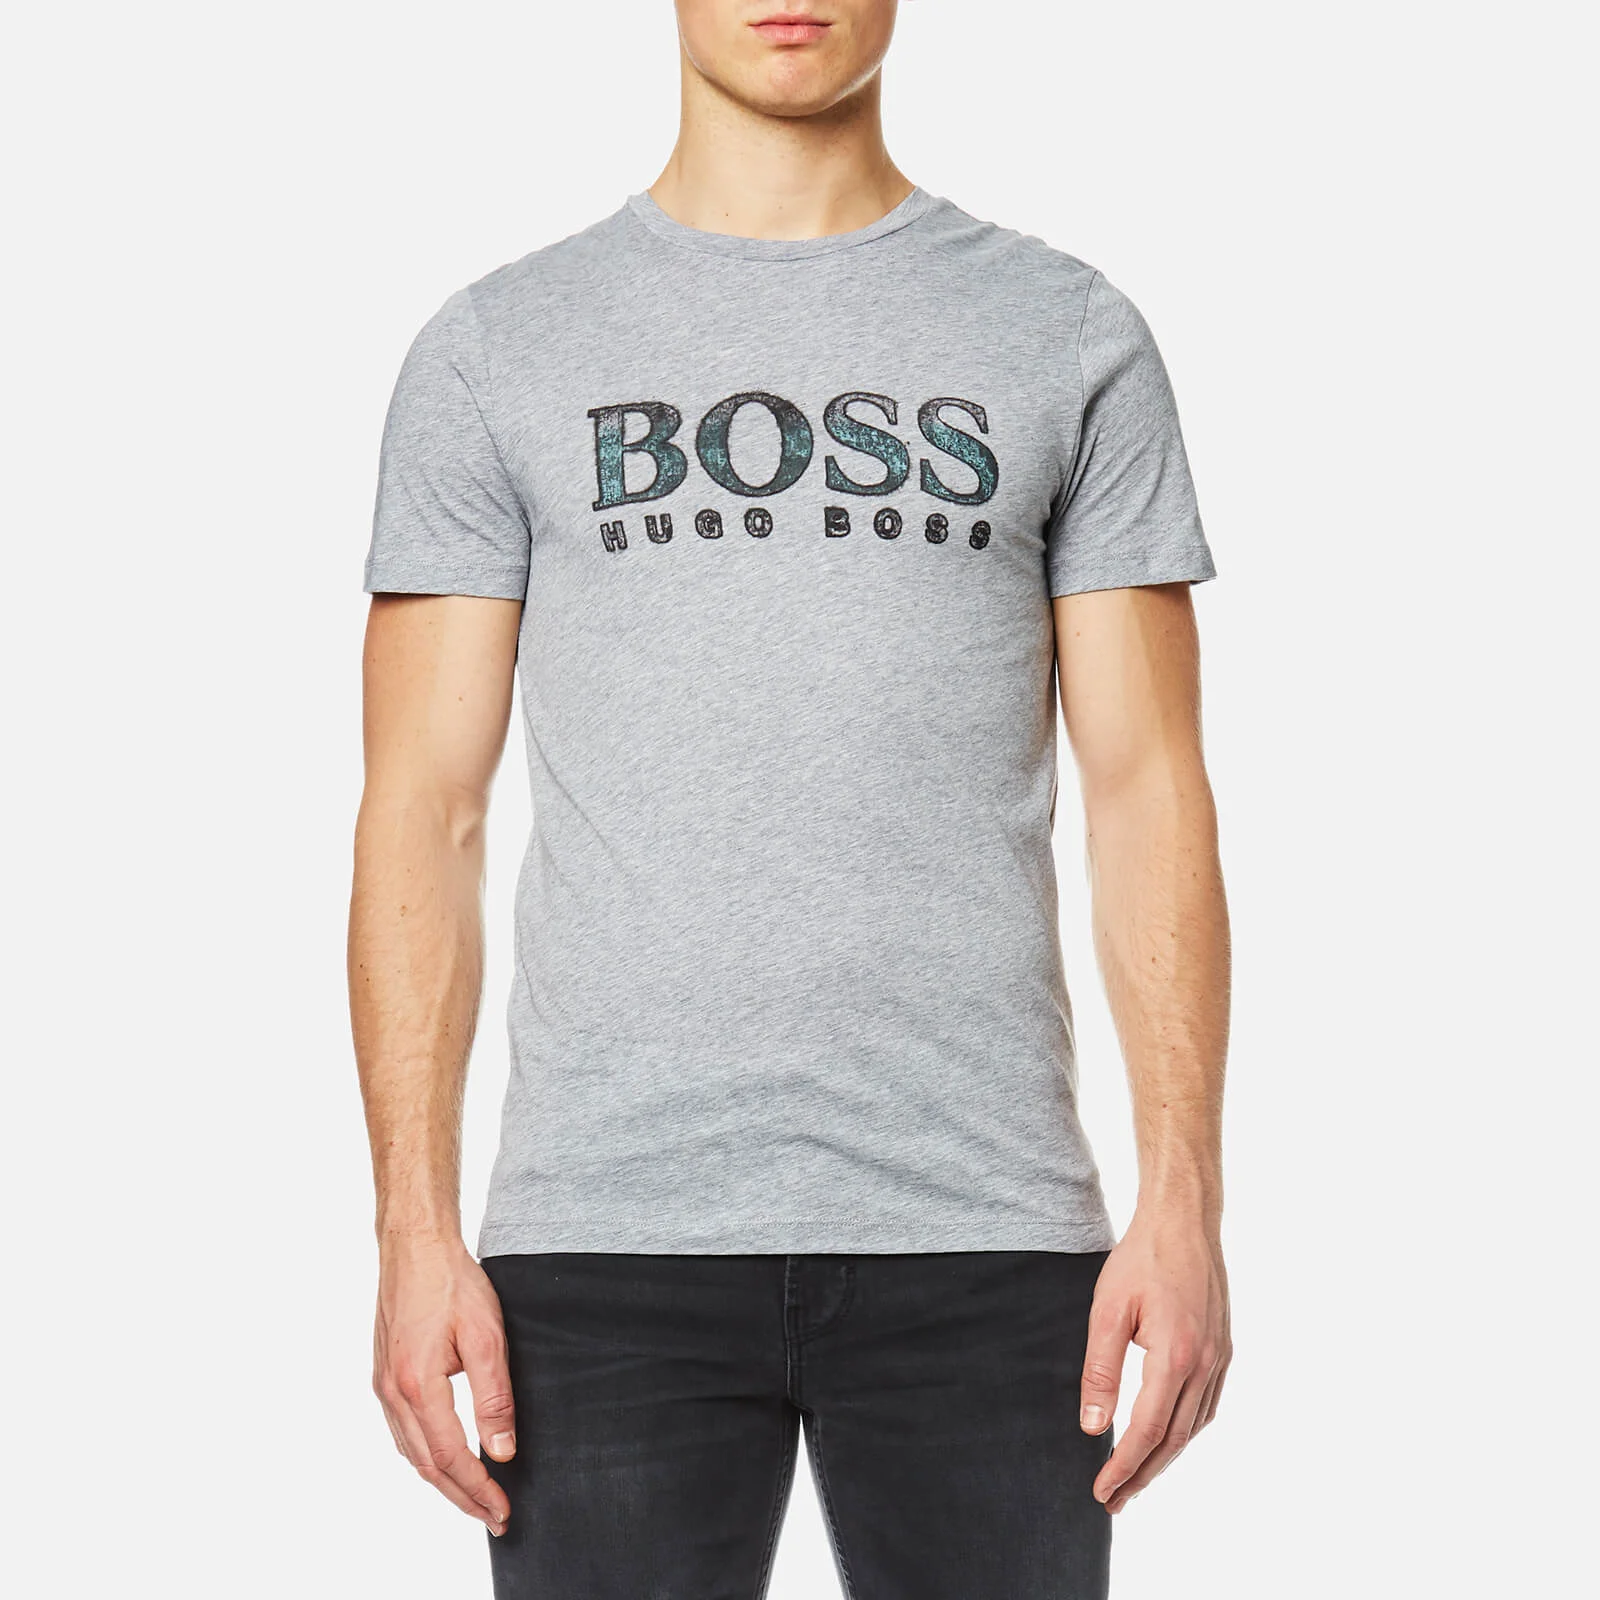 BOSS Orange Men's Turbulence 2 Logo T-Shirt - Grey Image 1